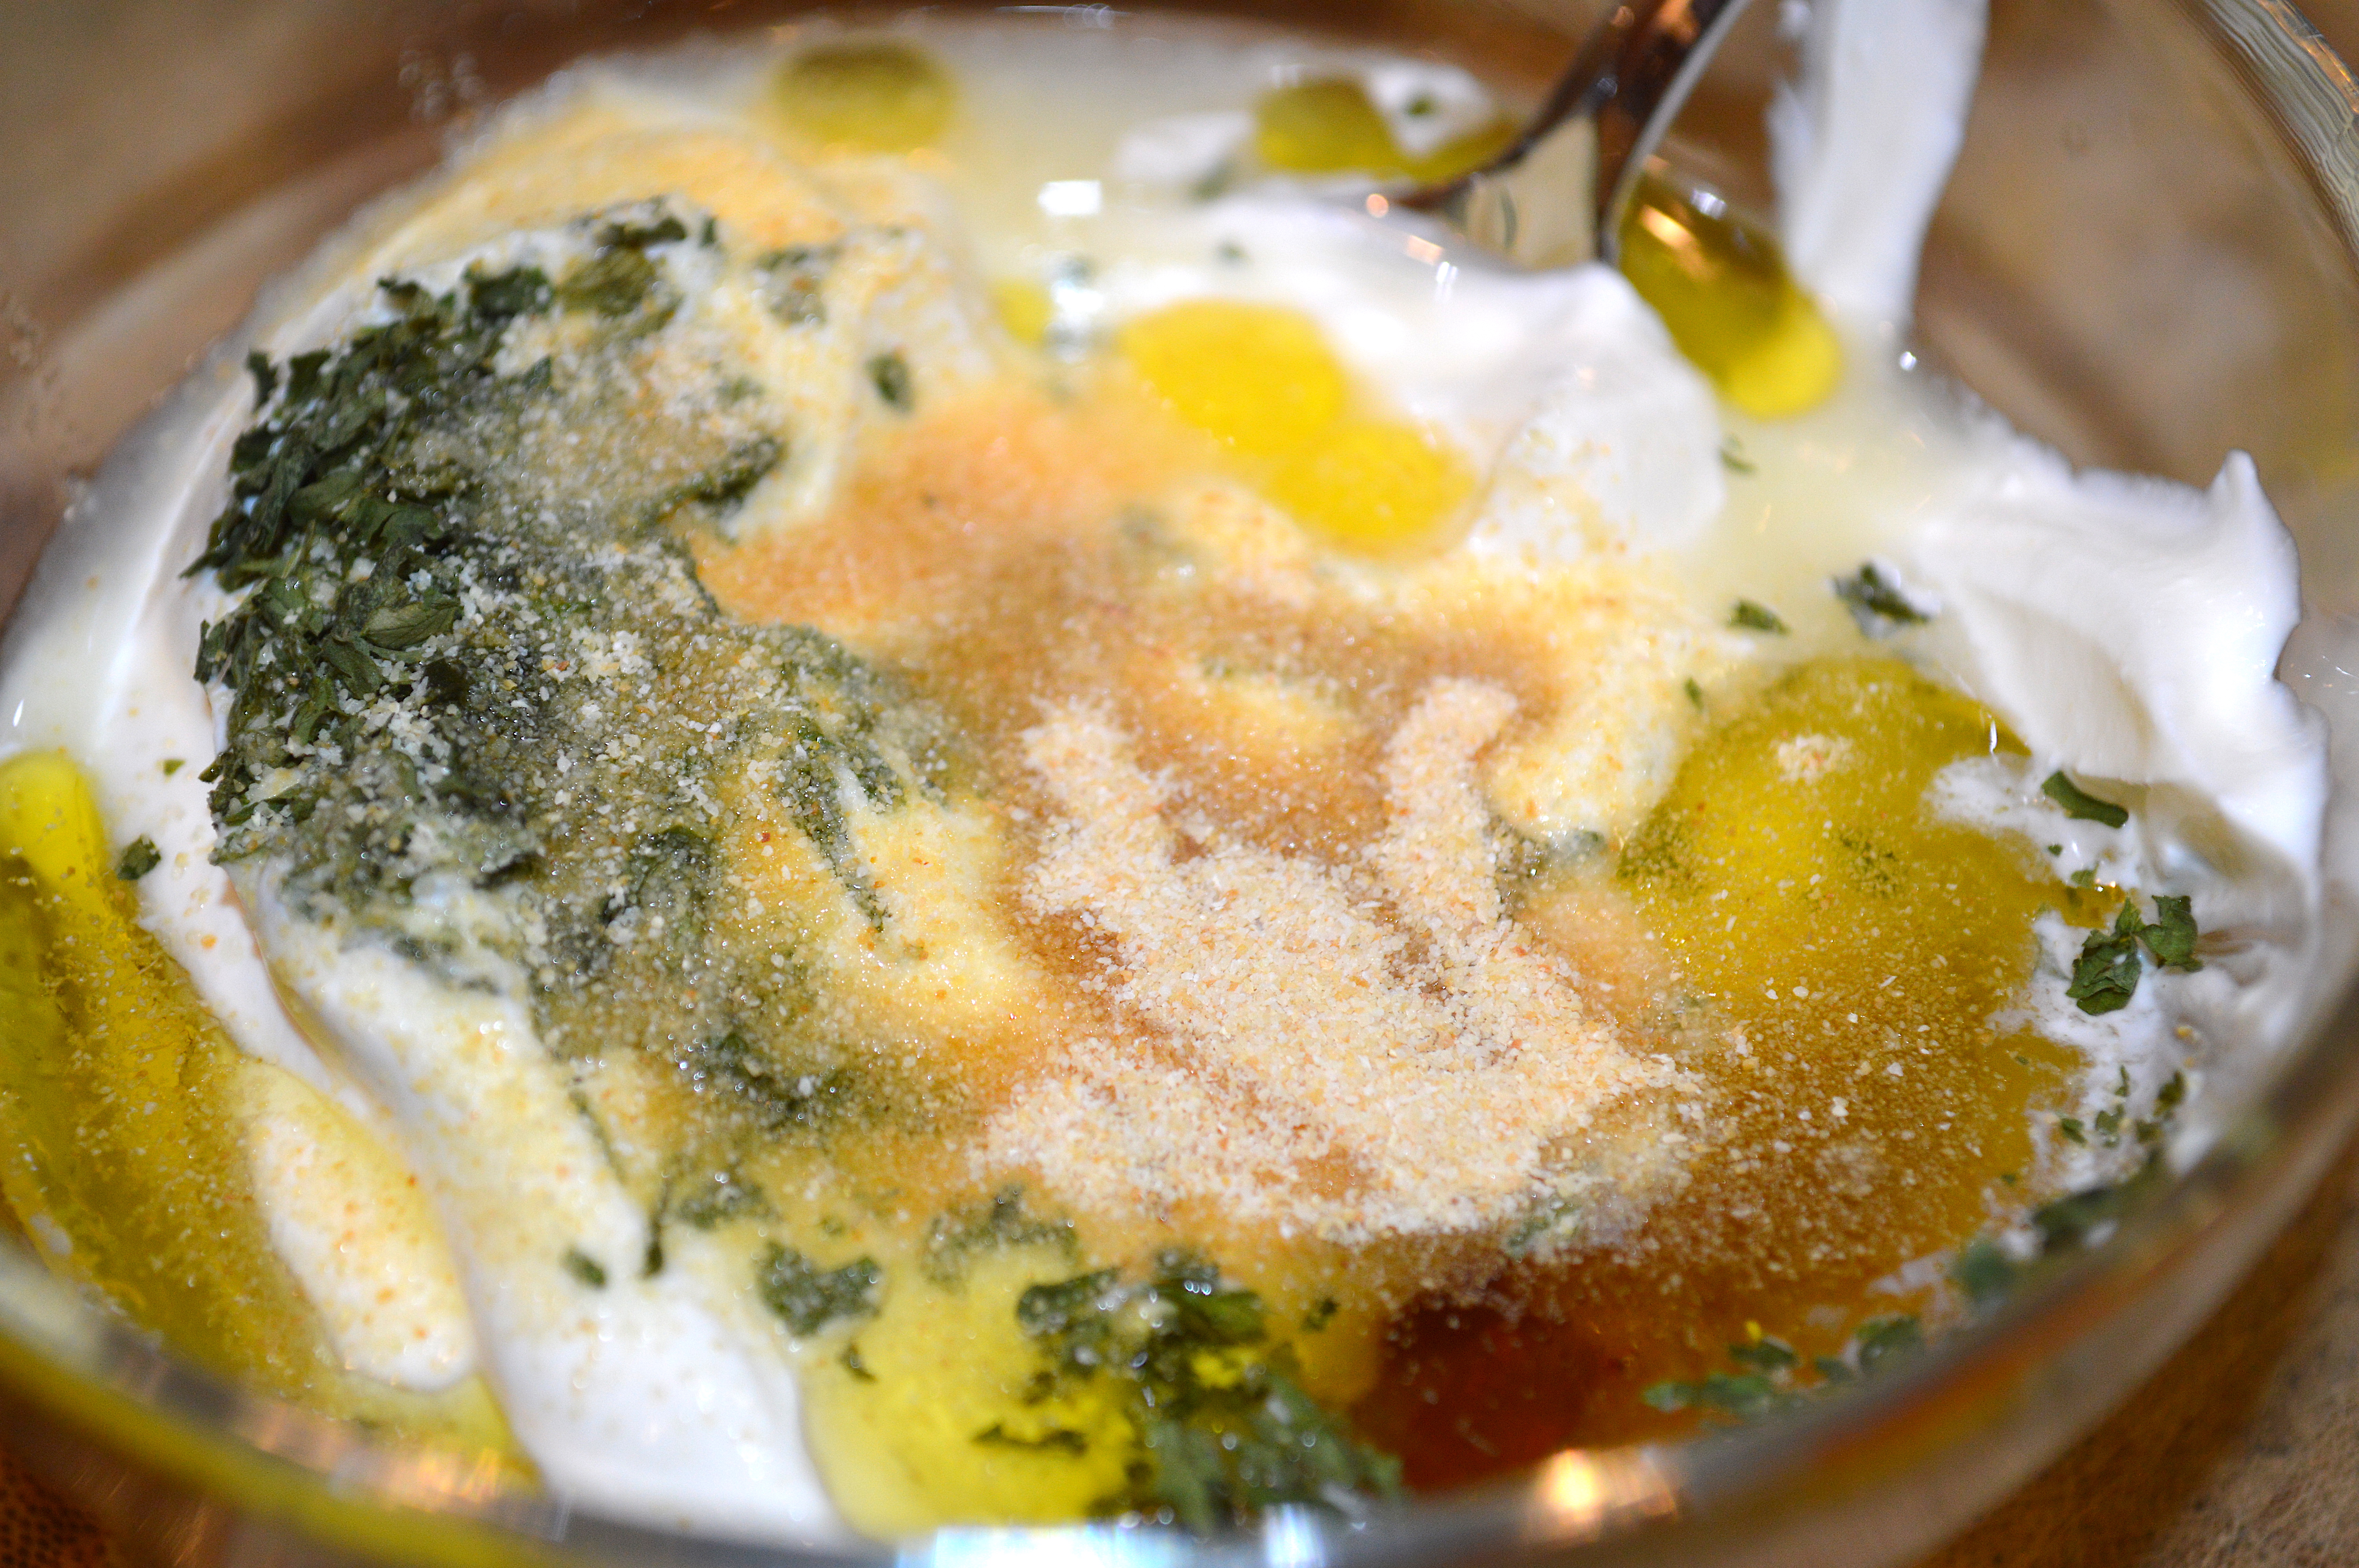 Sour Cream, Egg Yolk, Honey, Parsley, Garlic Powder, Olive Oil, Salt and Pepper